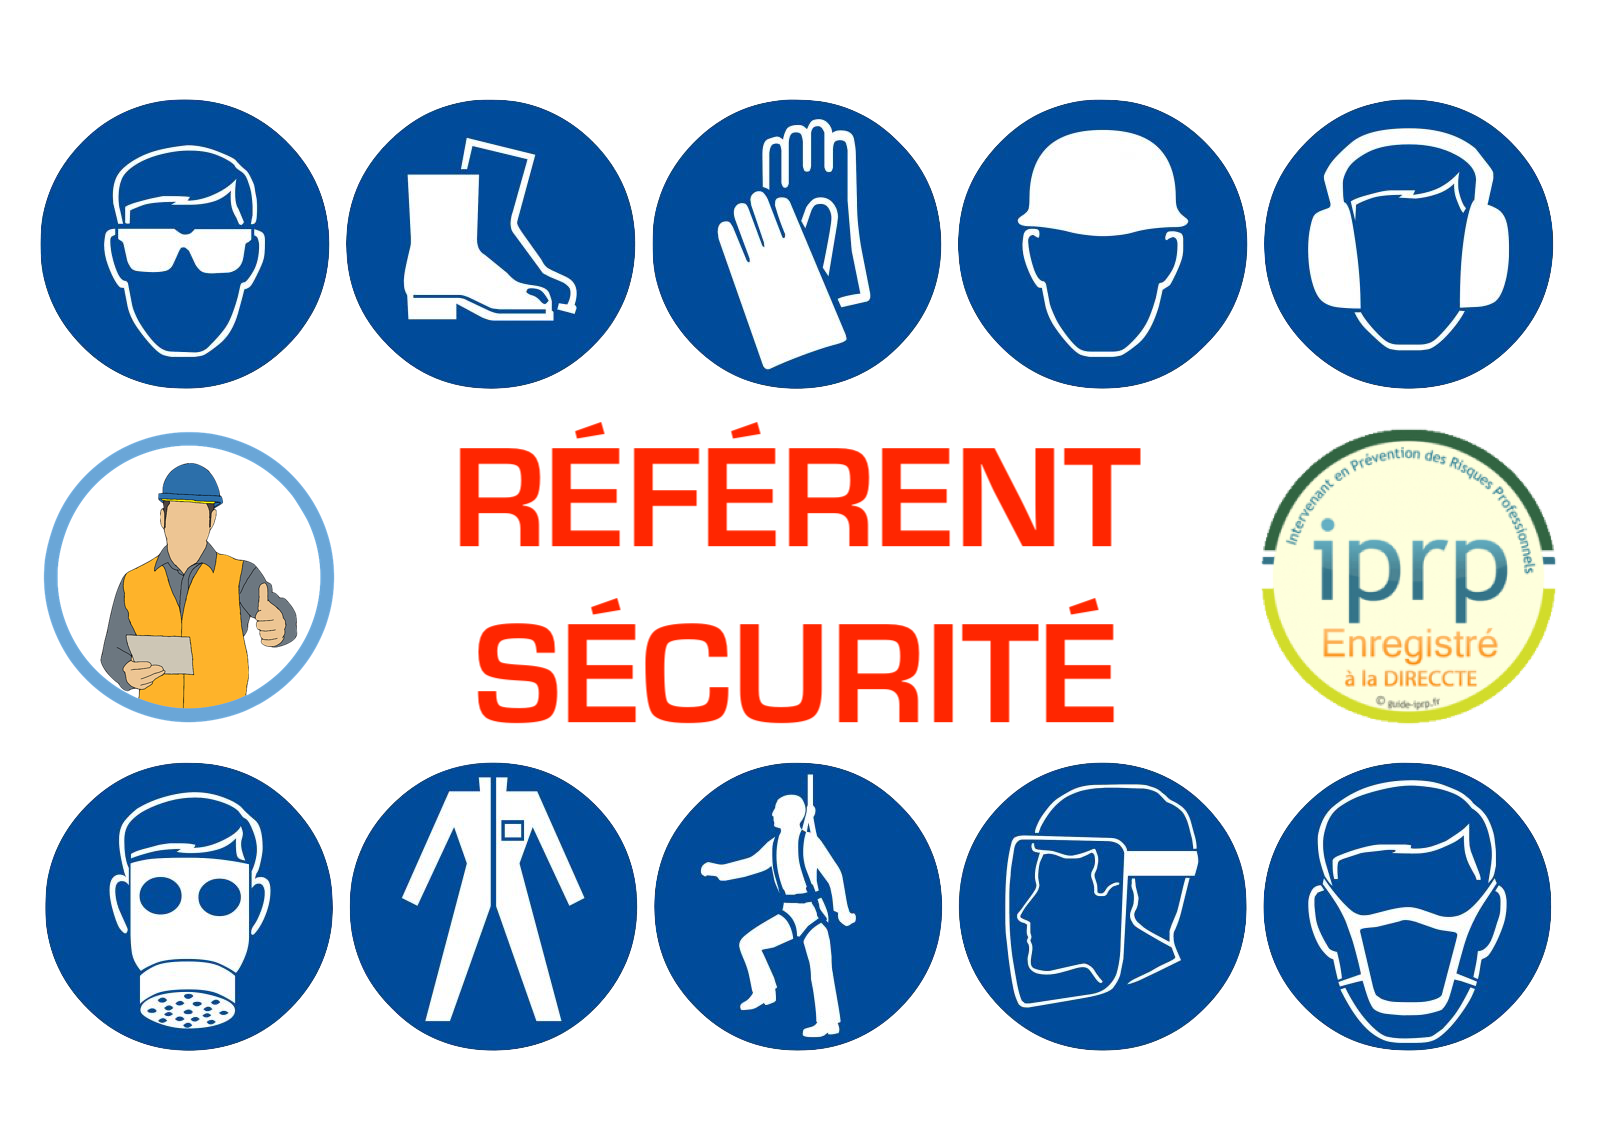 https://ledocumentunique.fr/wp-content/uploads/2019/03/Referent-securite-2.png